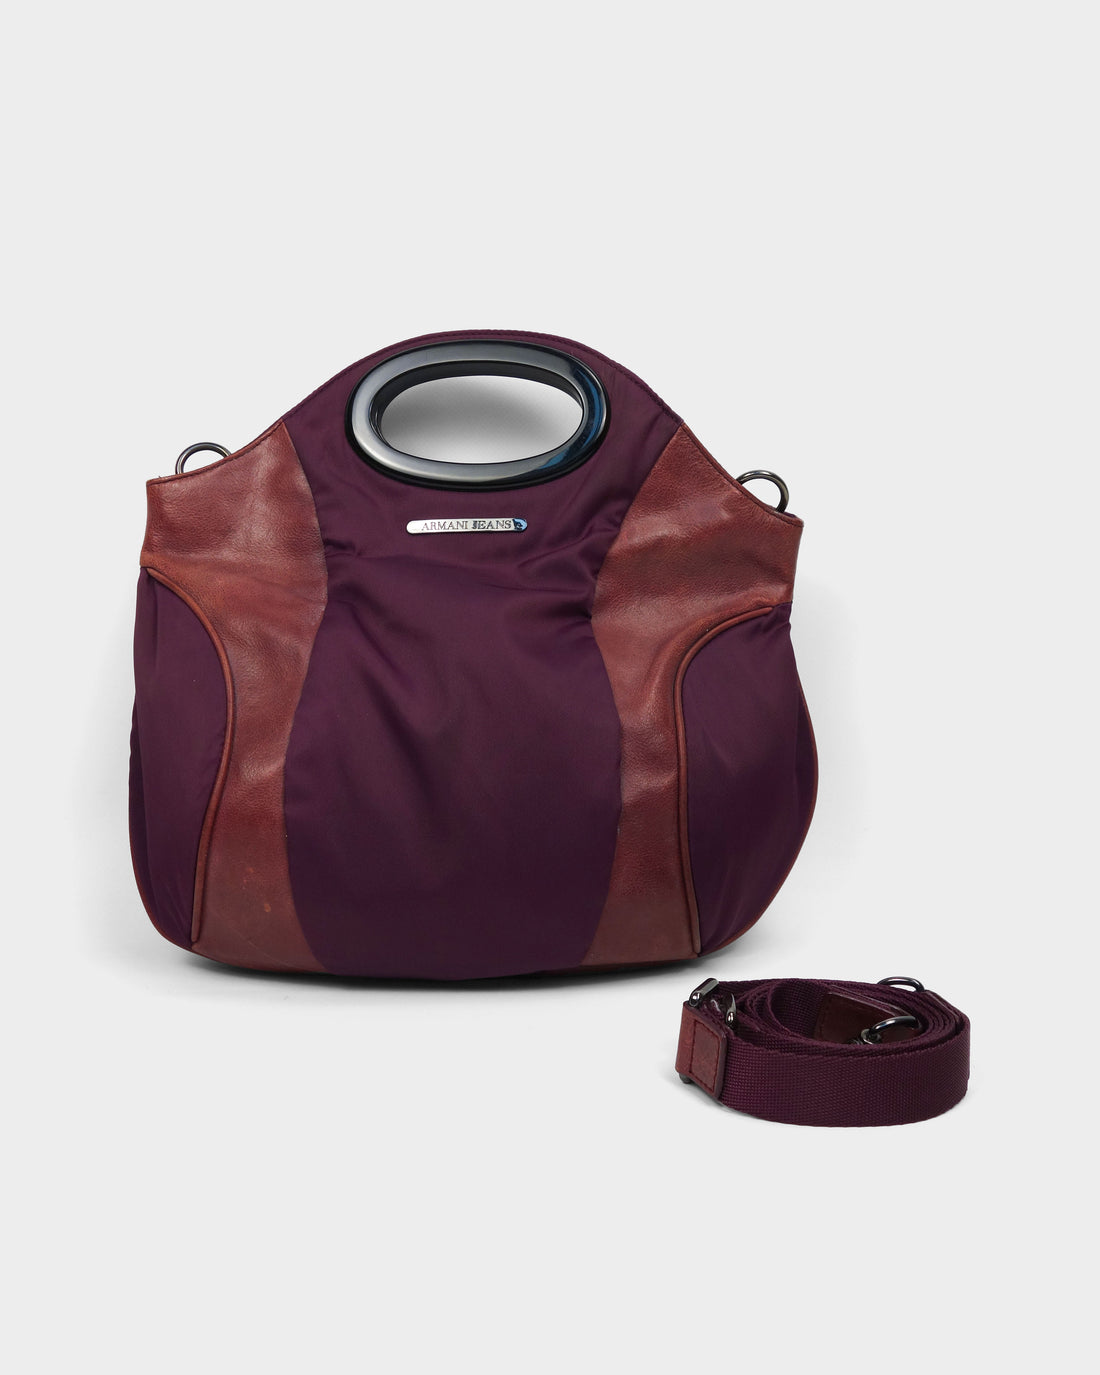 Armani Purple Leather + Nylon Shoulder Bag 2000's